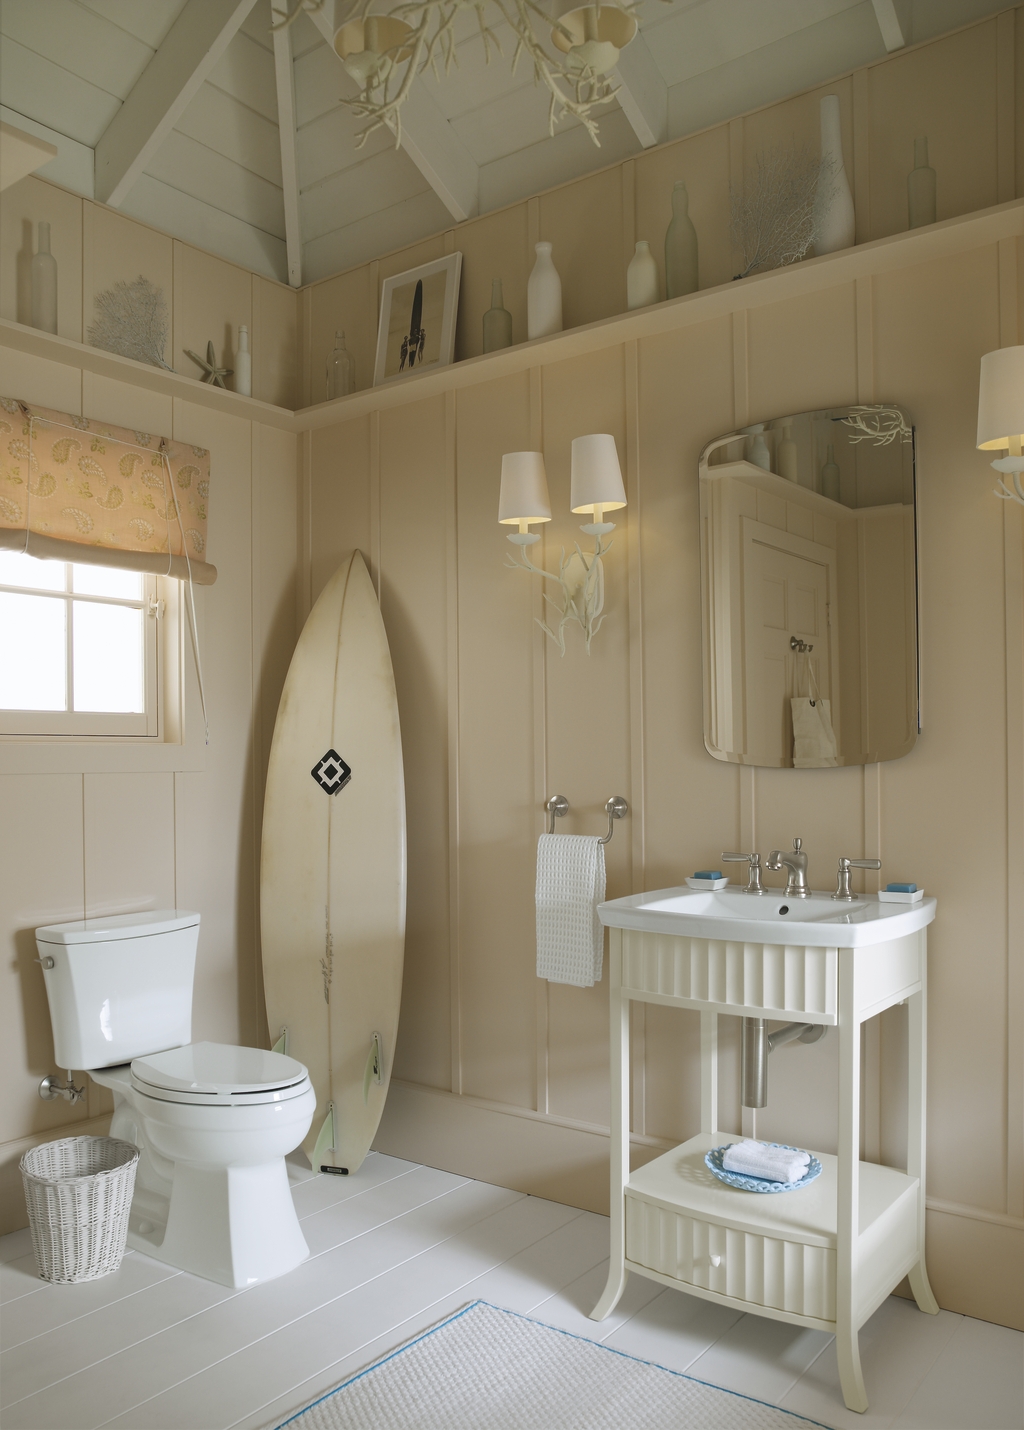 Awesome bathroom interior design nautical theme white solid vanity acrylic closet